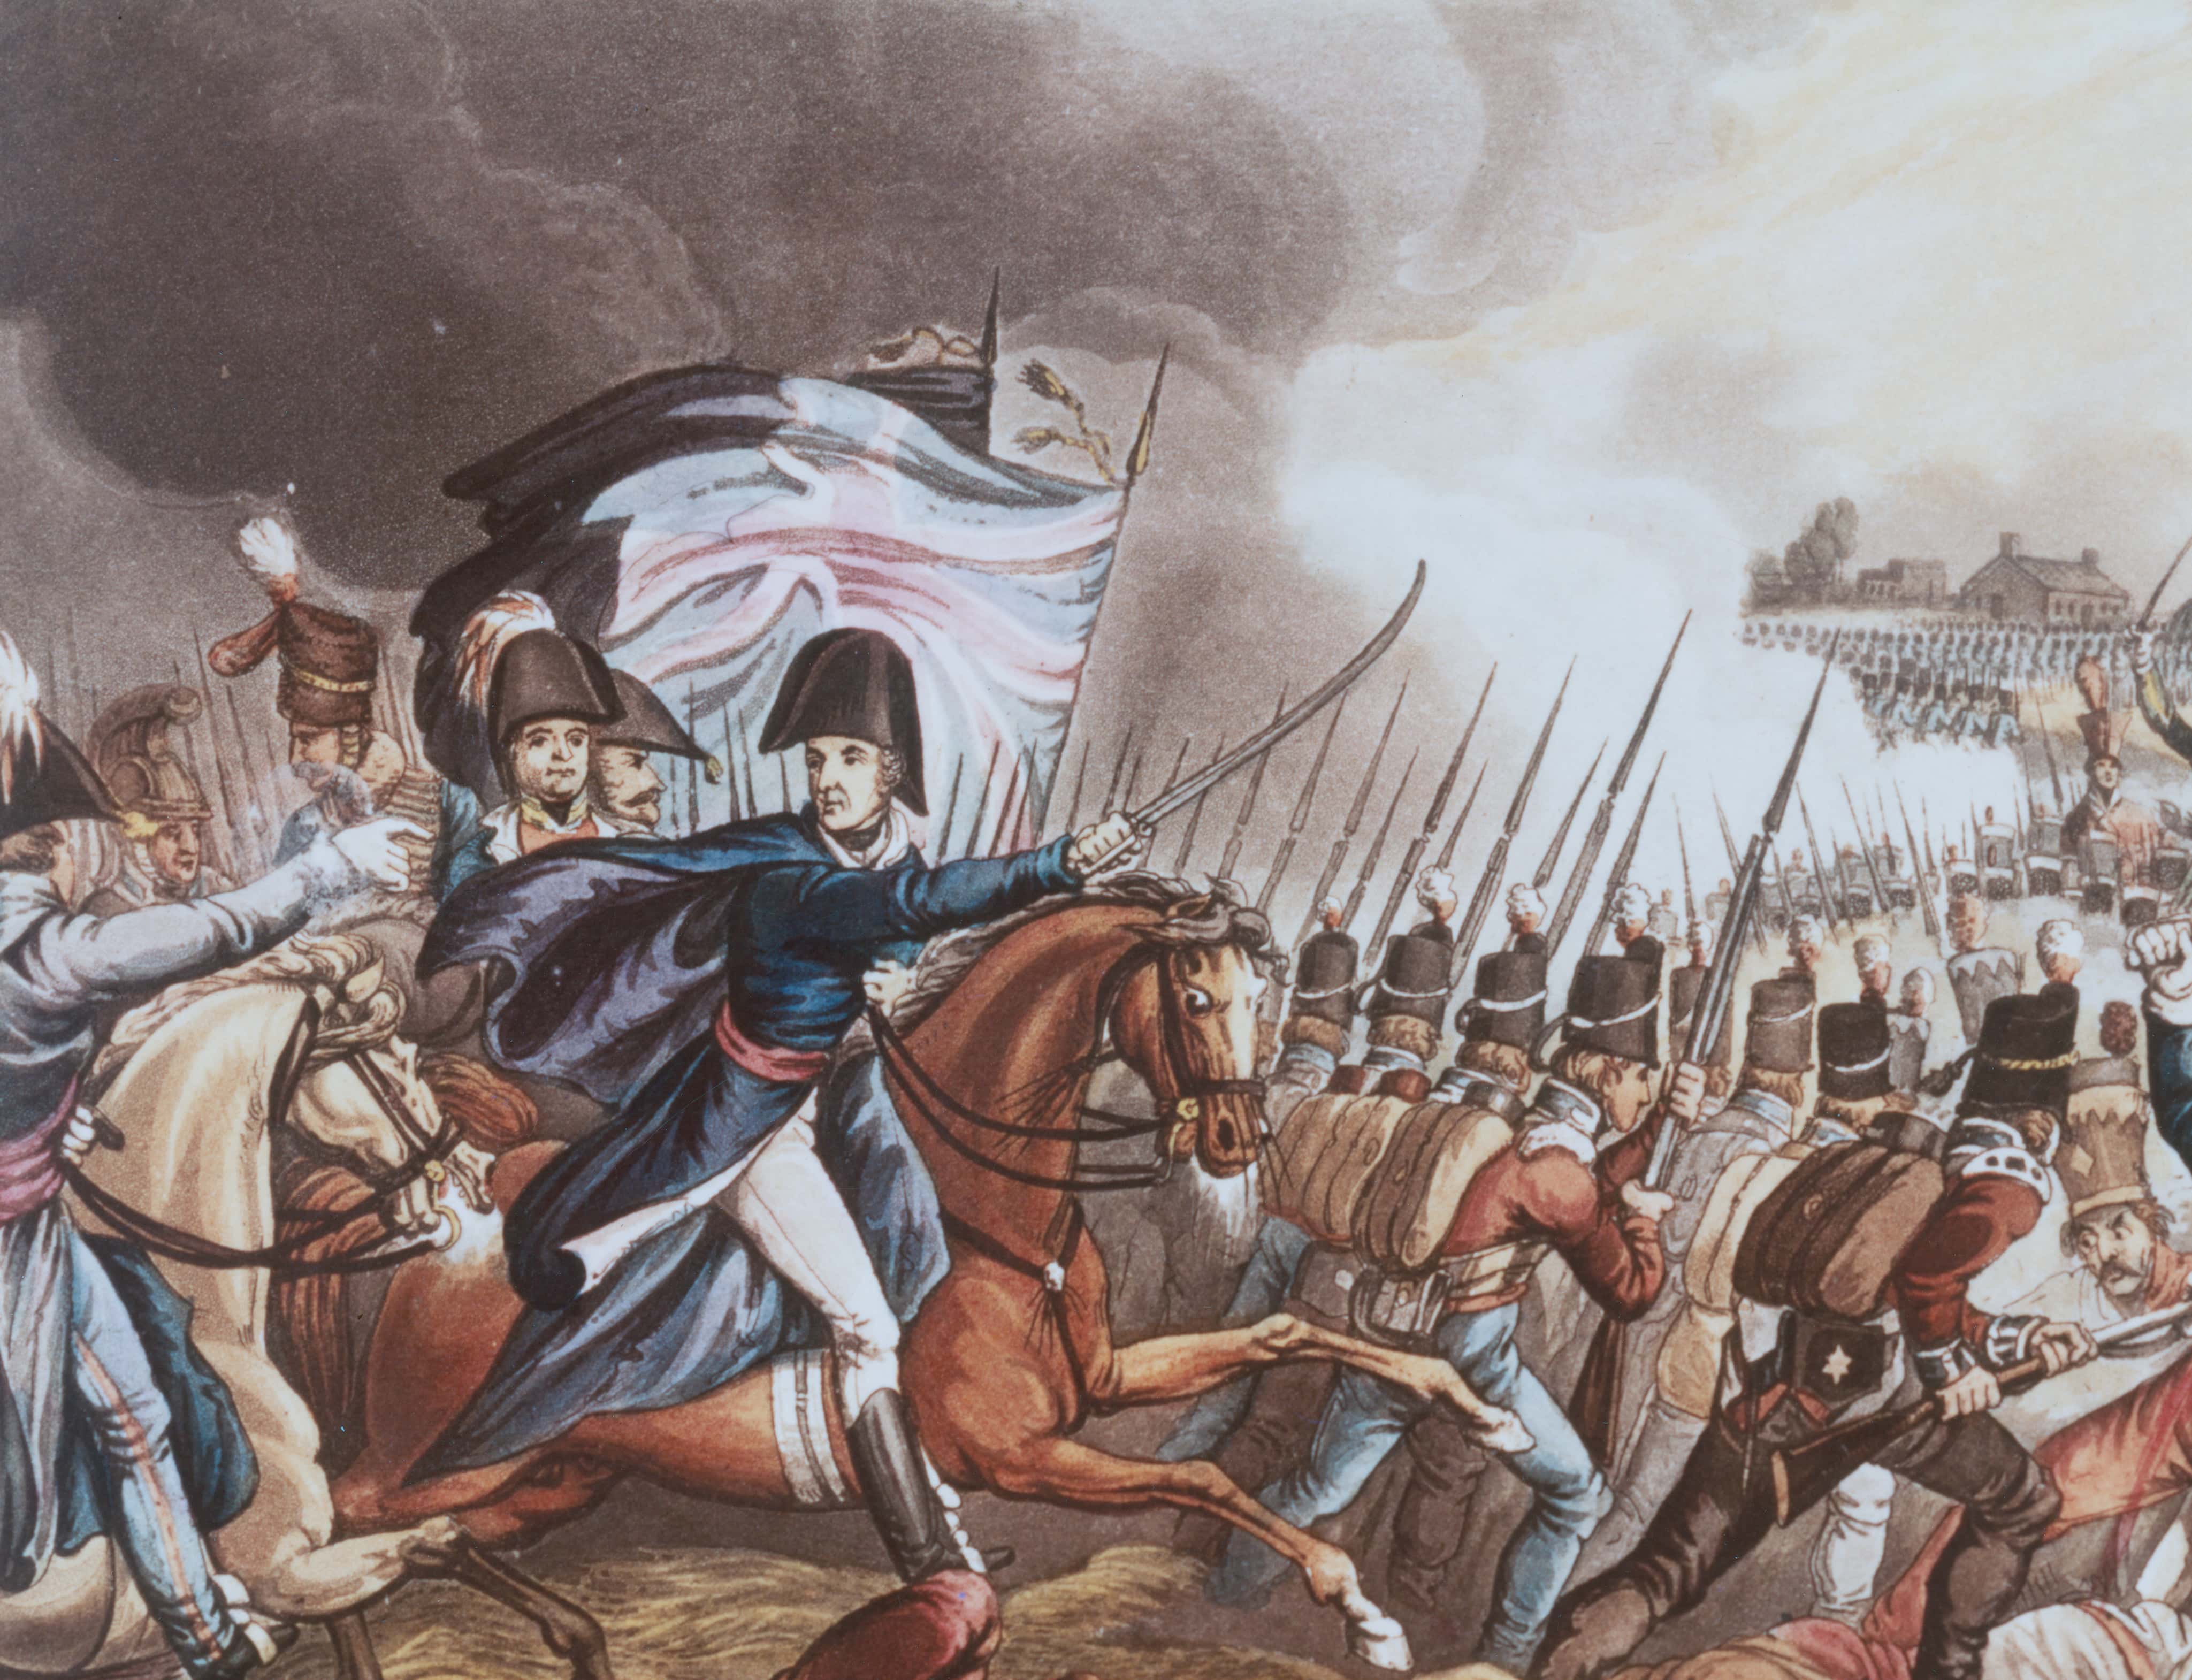 Was Napoleonic Wars brutal?